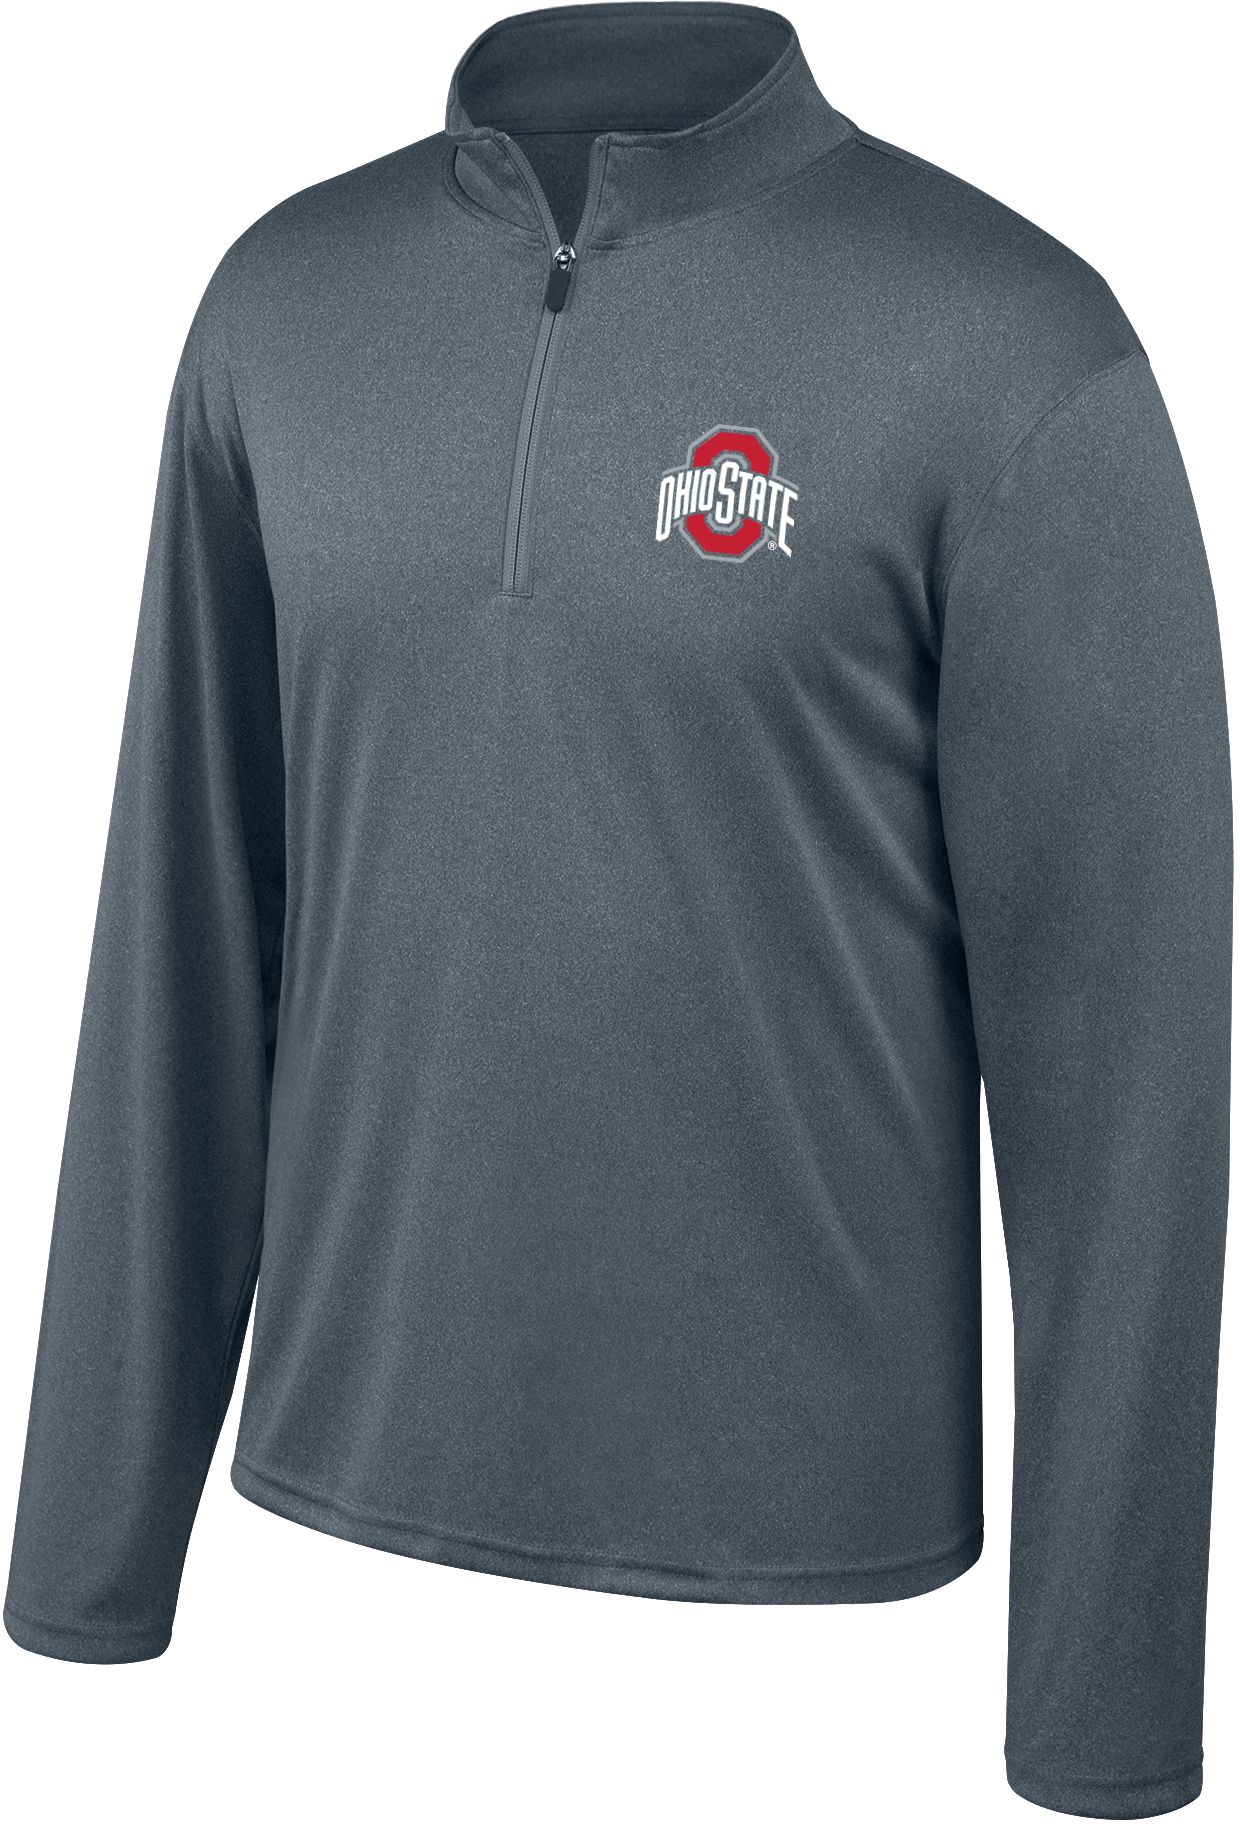 grey ohio state jersey